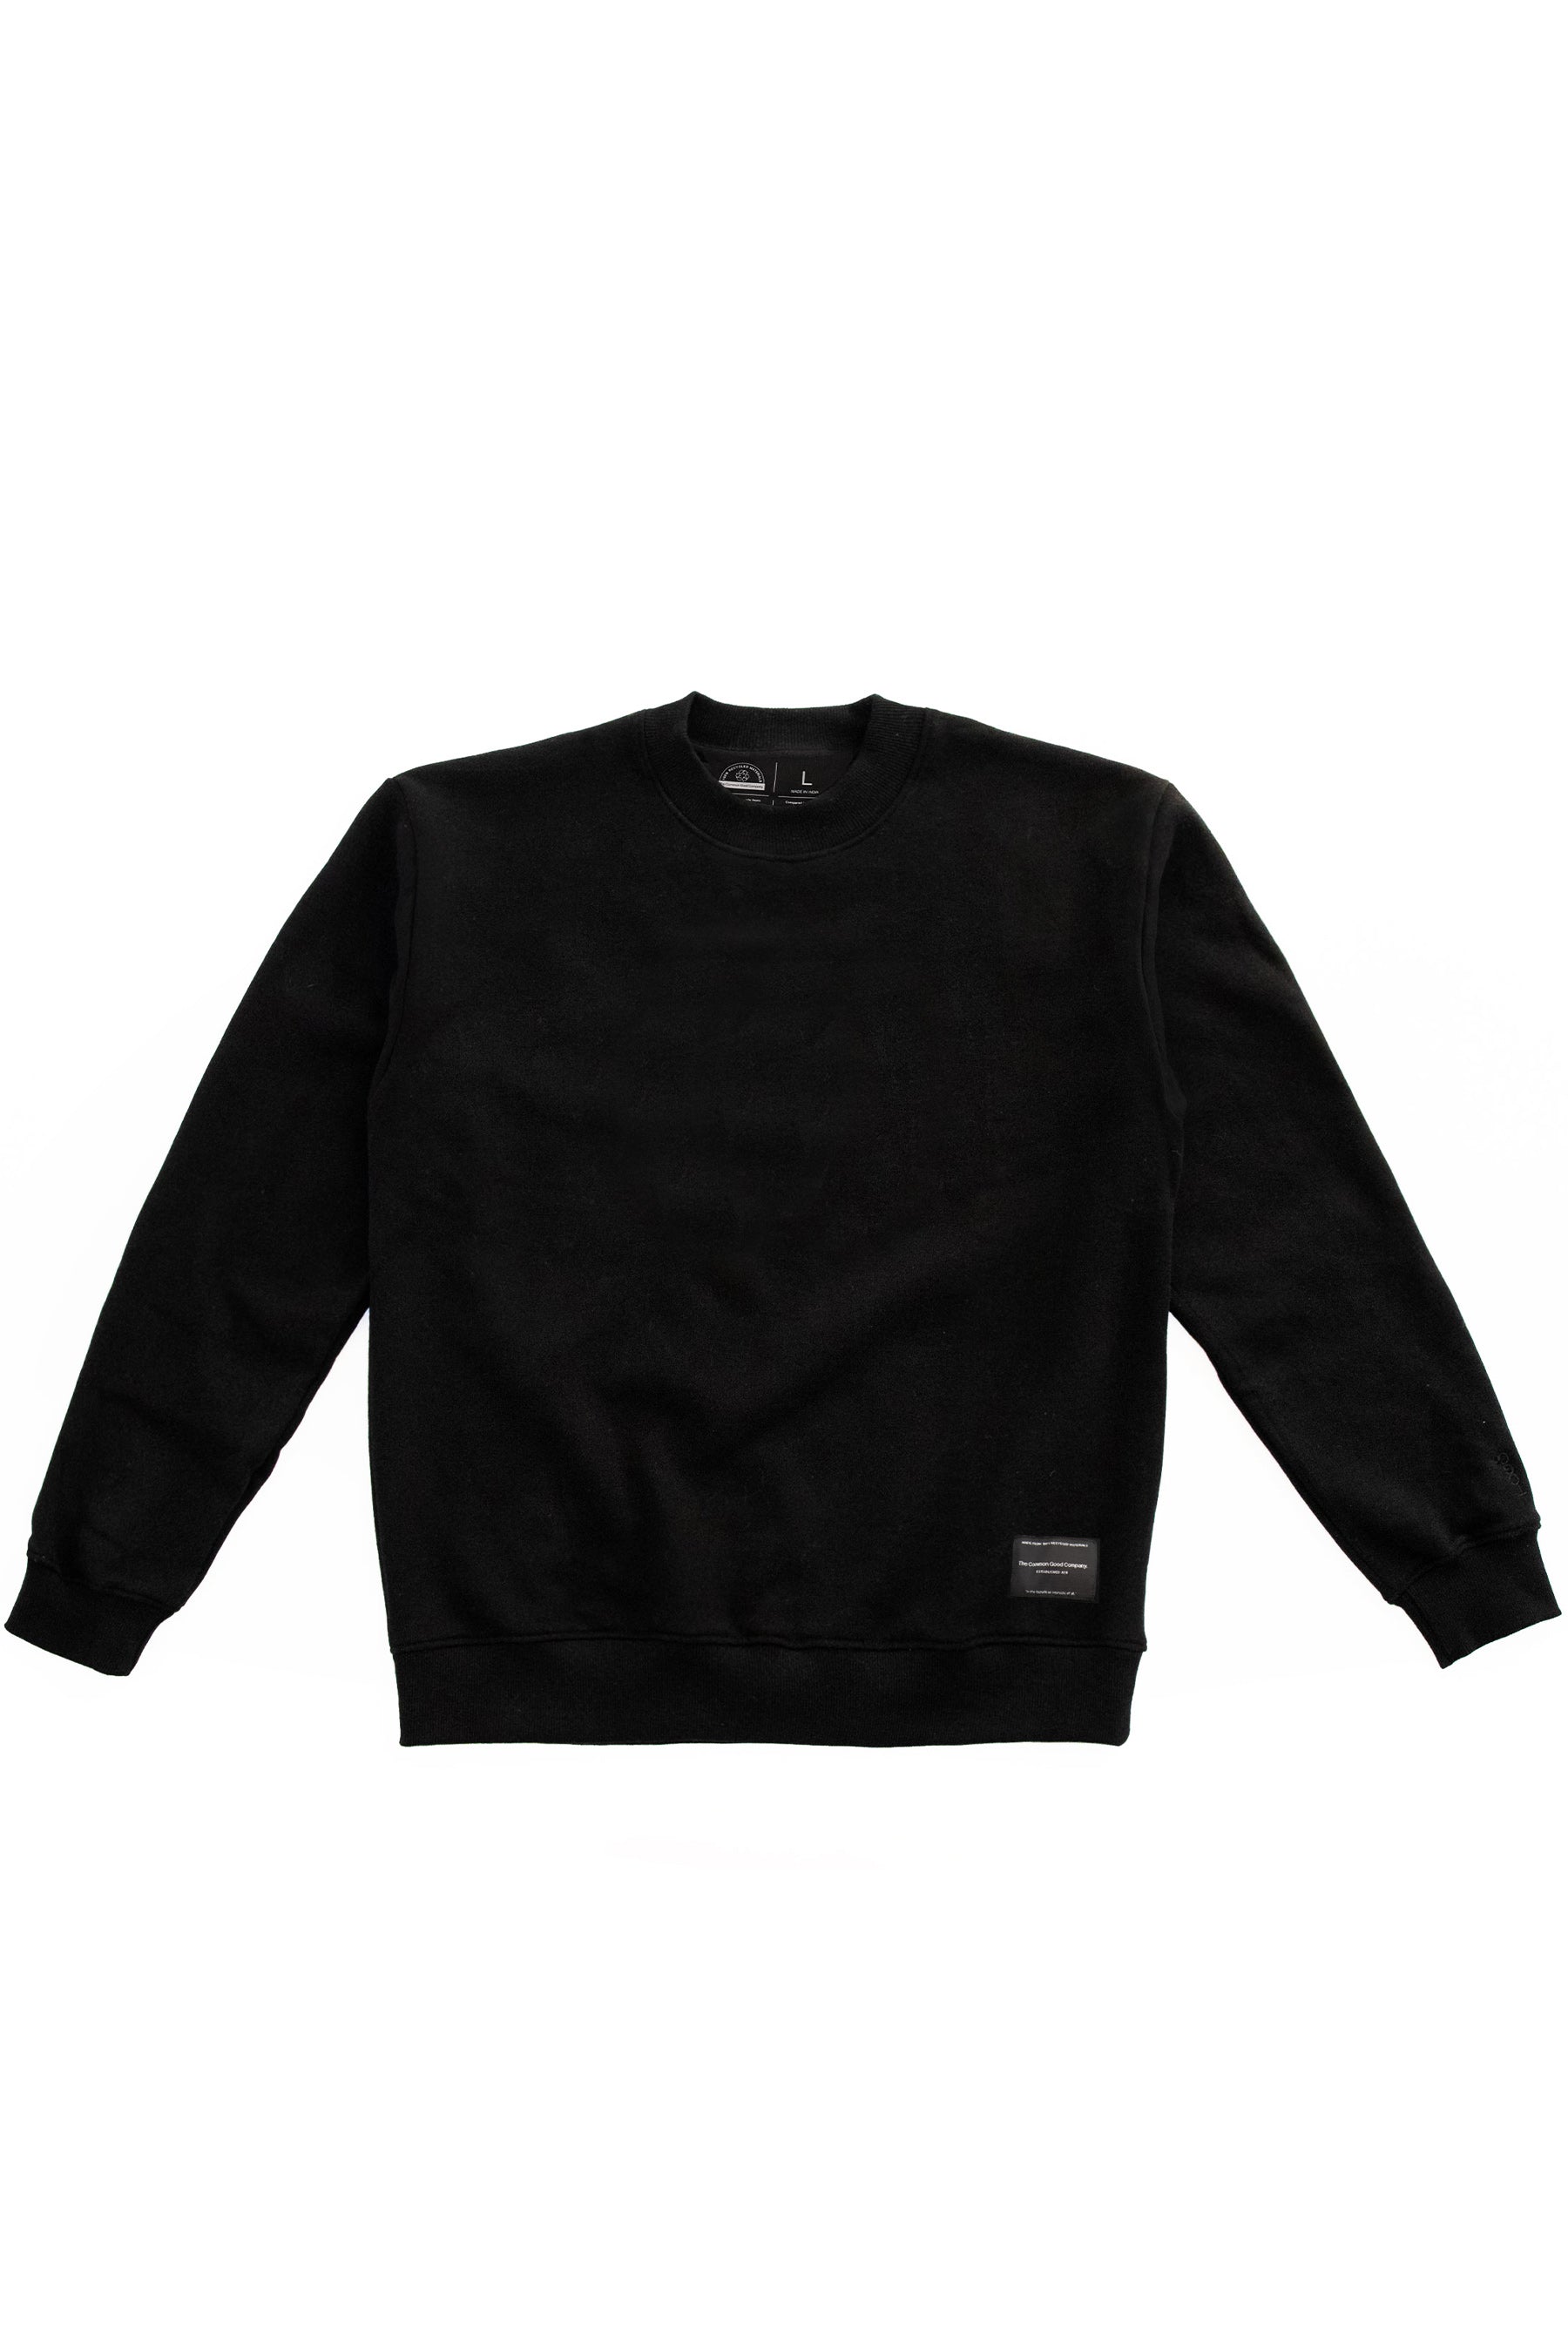  Dane Black Box Fit Sweater Patch Adams